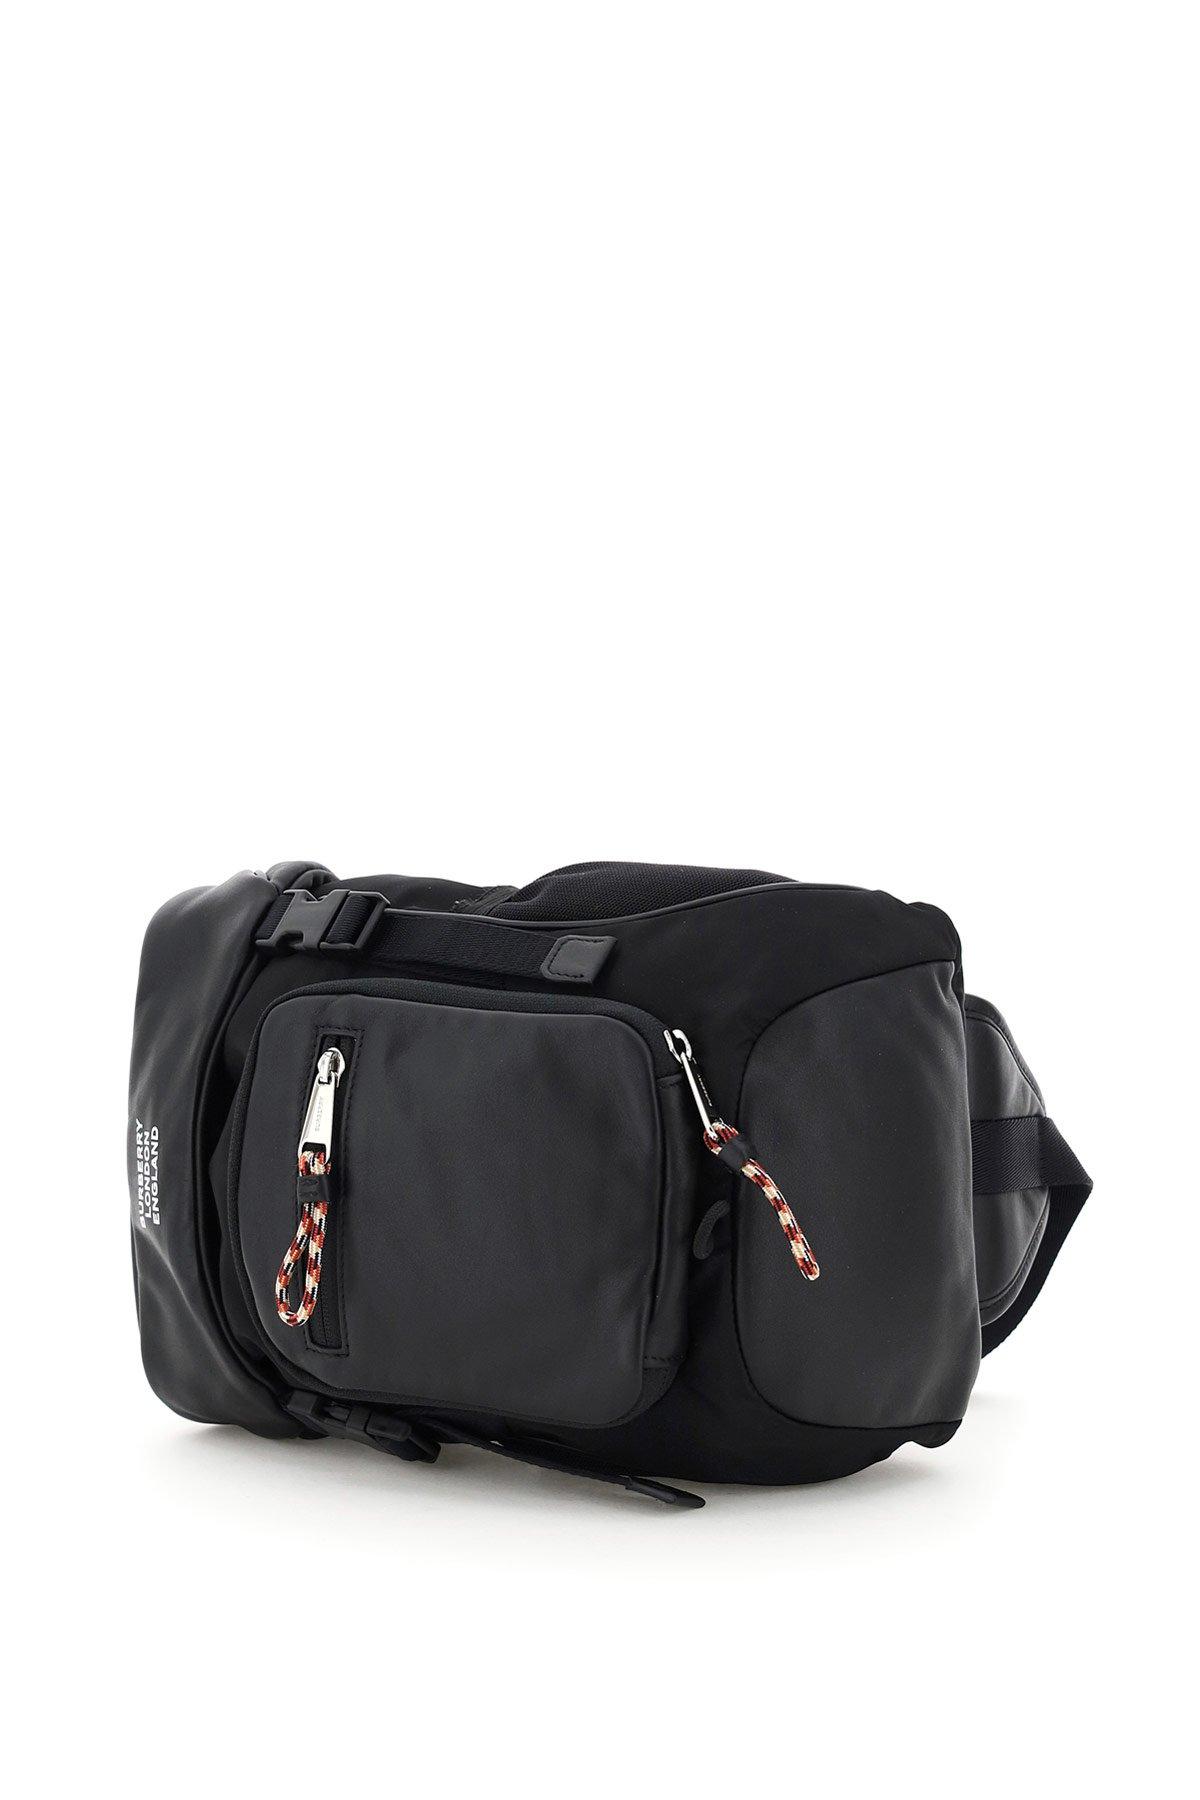 Burberry Leather Leo One Shoulder Backpack in Black for Men - Save 